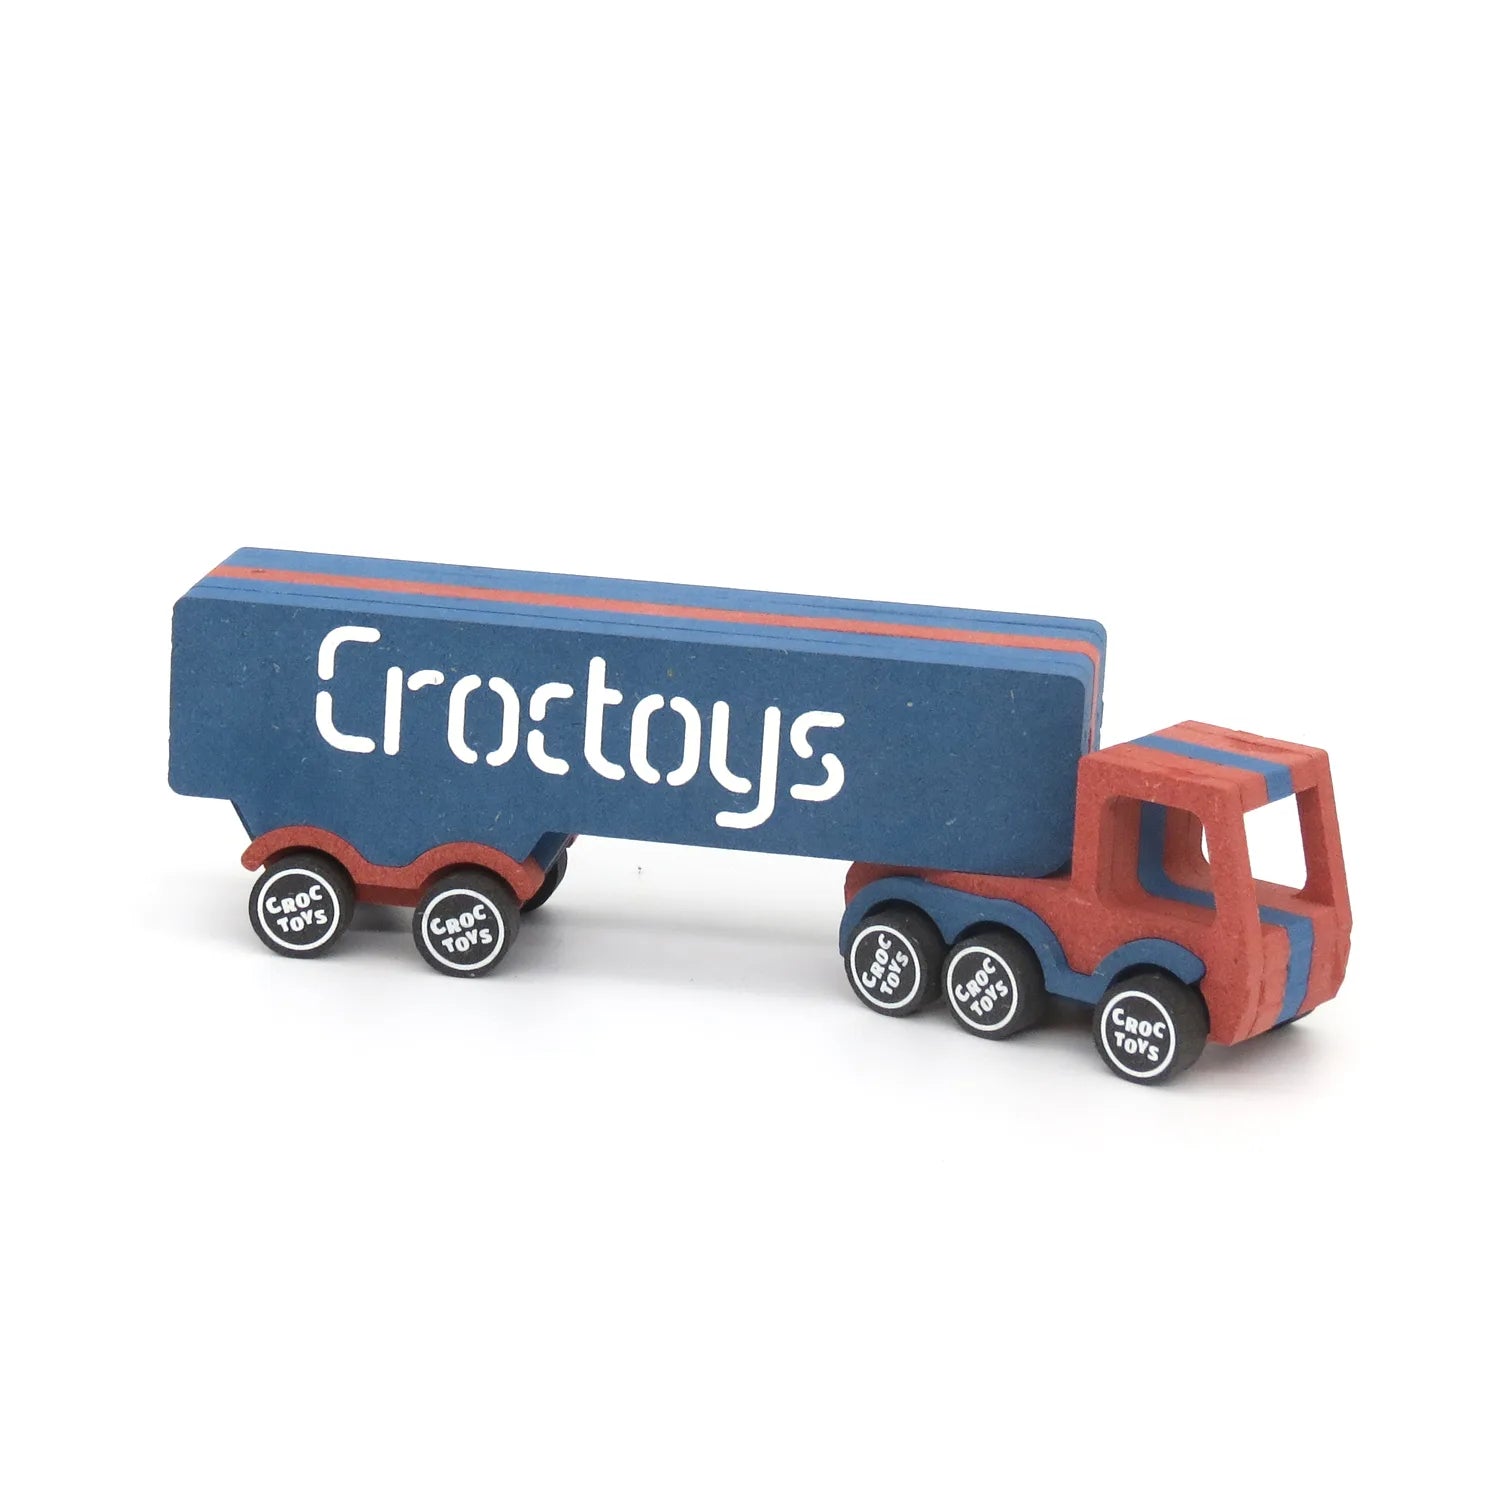 Croctoys | DIY Autobausatz | Remy